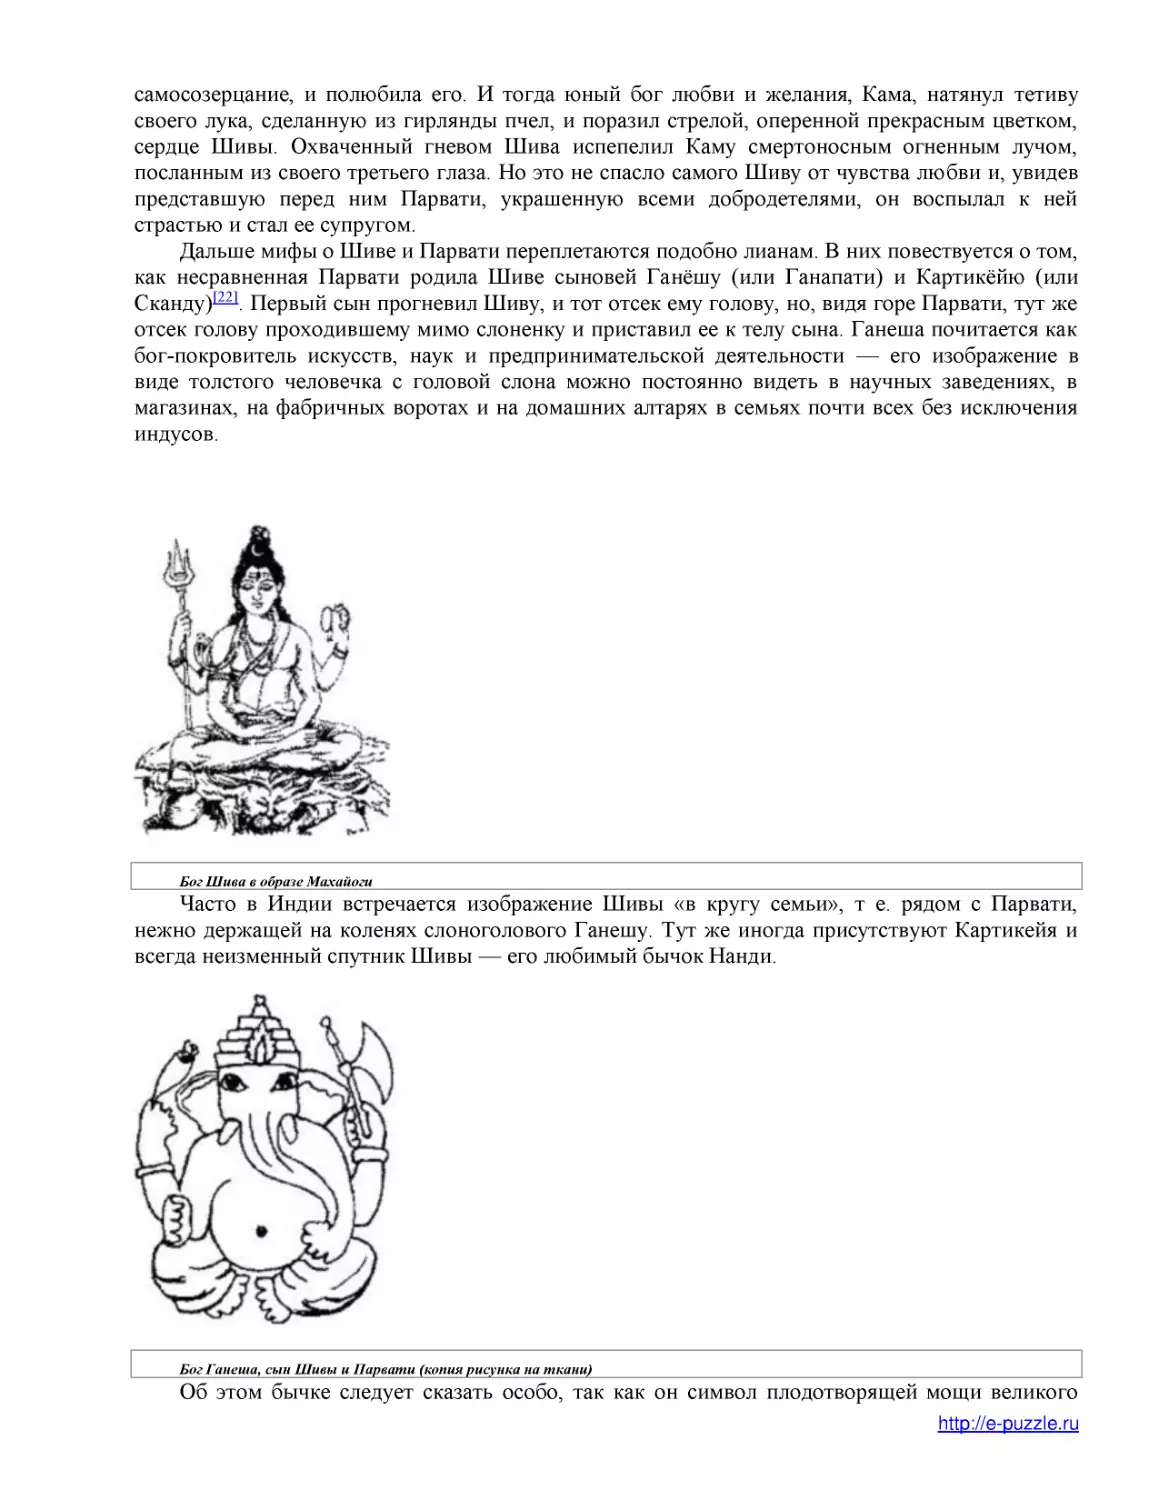 Бог Шива в образе Махайоги
Бог Ганеша, сын Шивы и Парвати (копия рисунка на ткани)